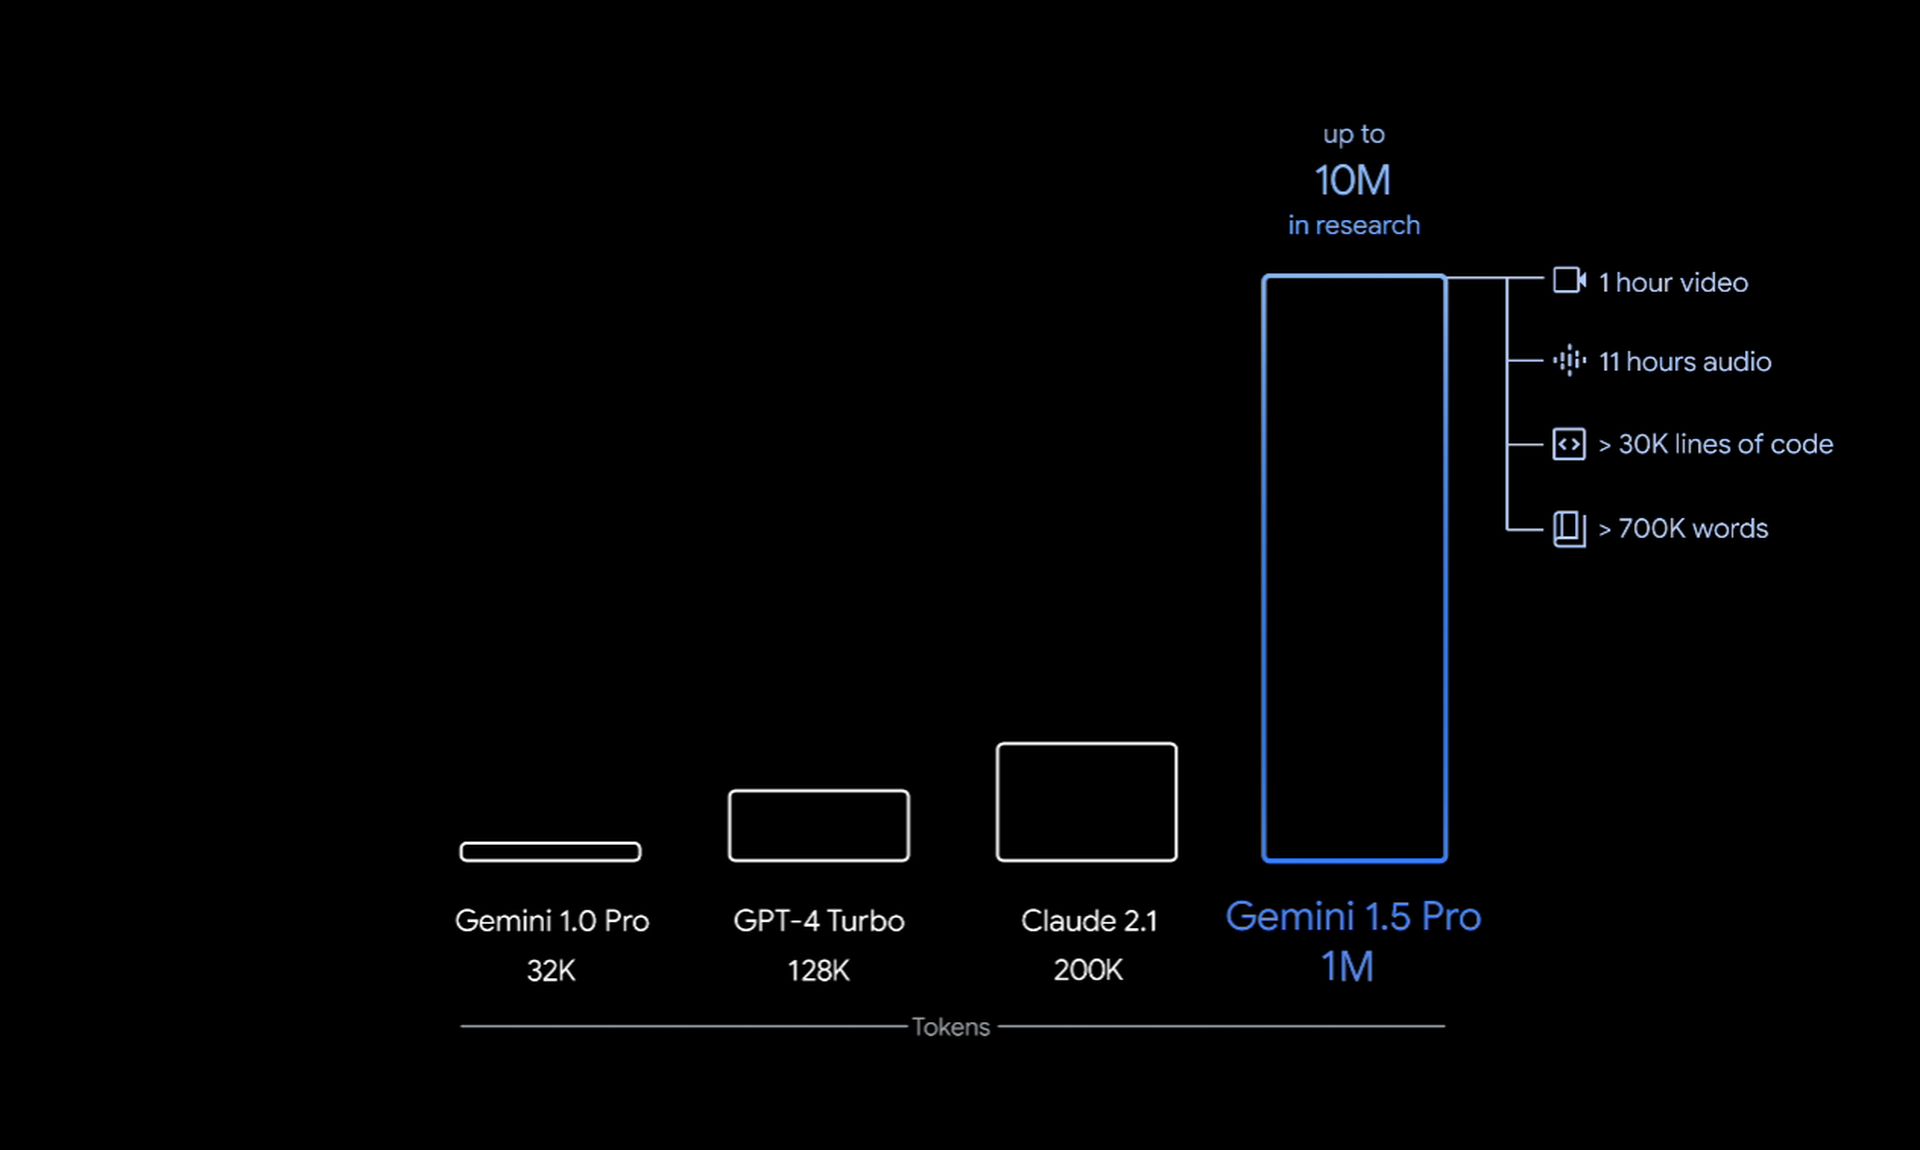 Google Gemini 1.5 Pro 